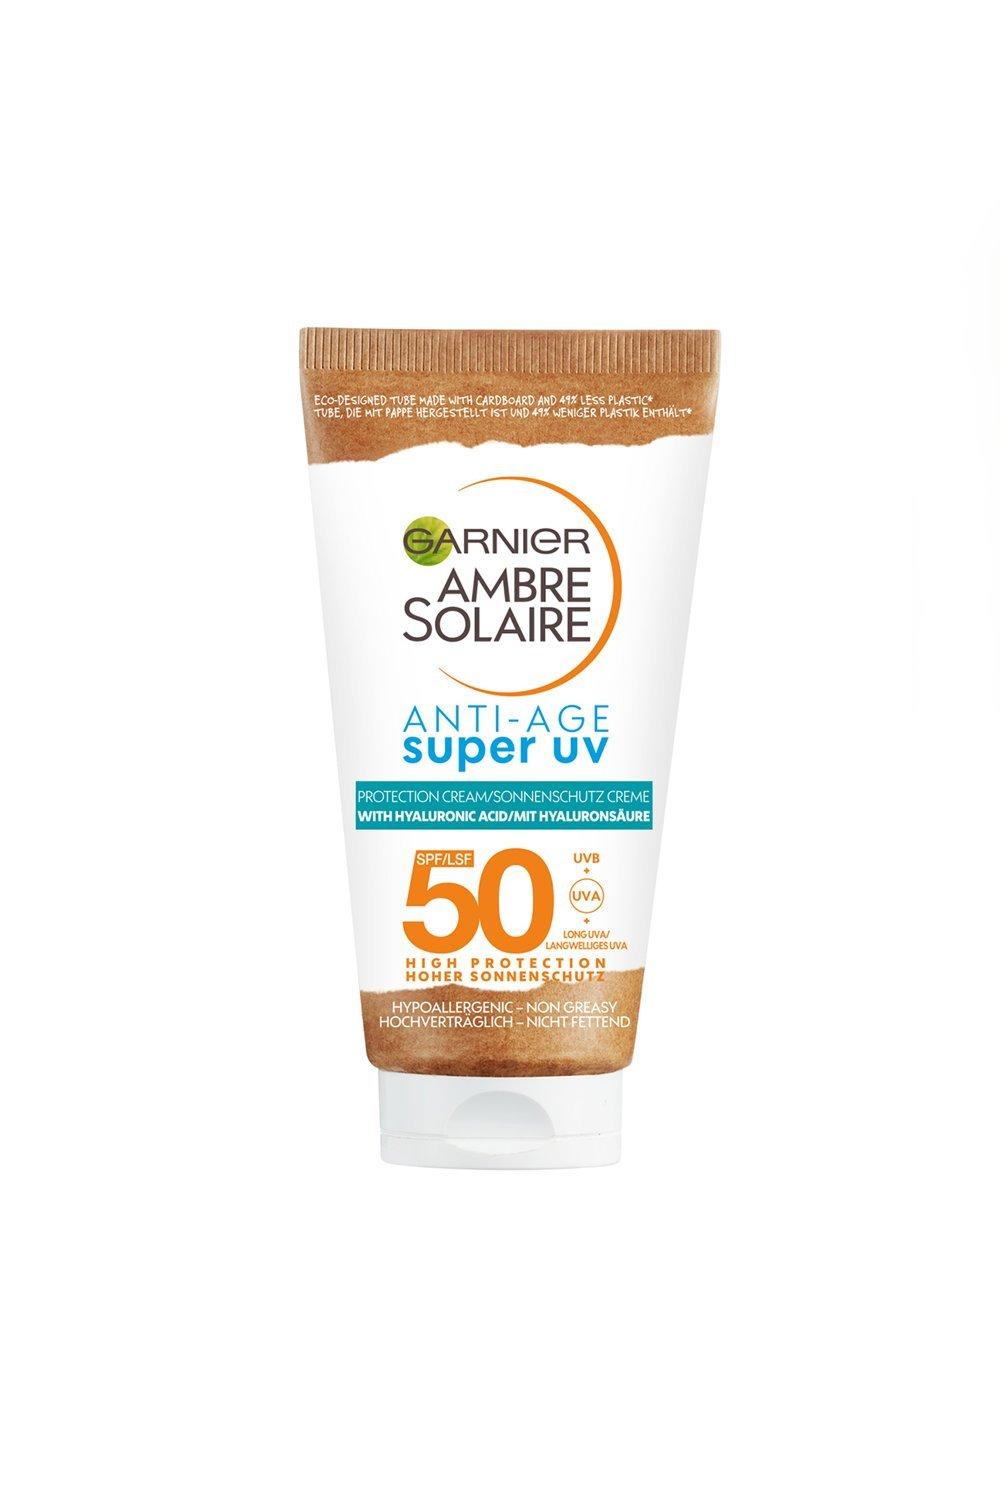 Garnier Ambre Solaire Anti-Age Super Uv Face Protection Cream Spf50 50Ml (Bespaar 17%), White